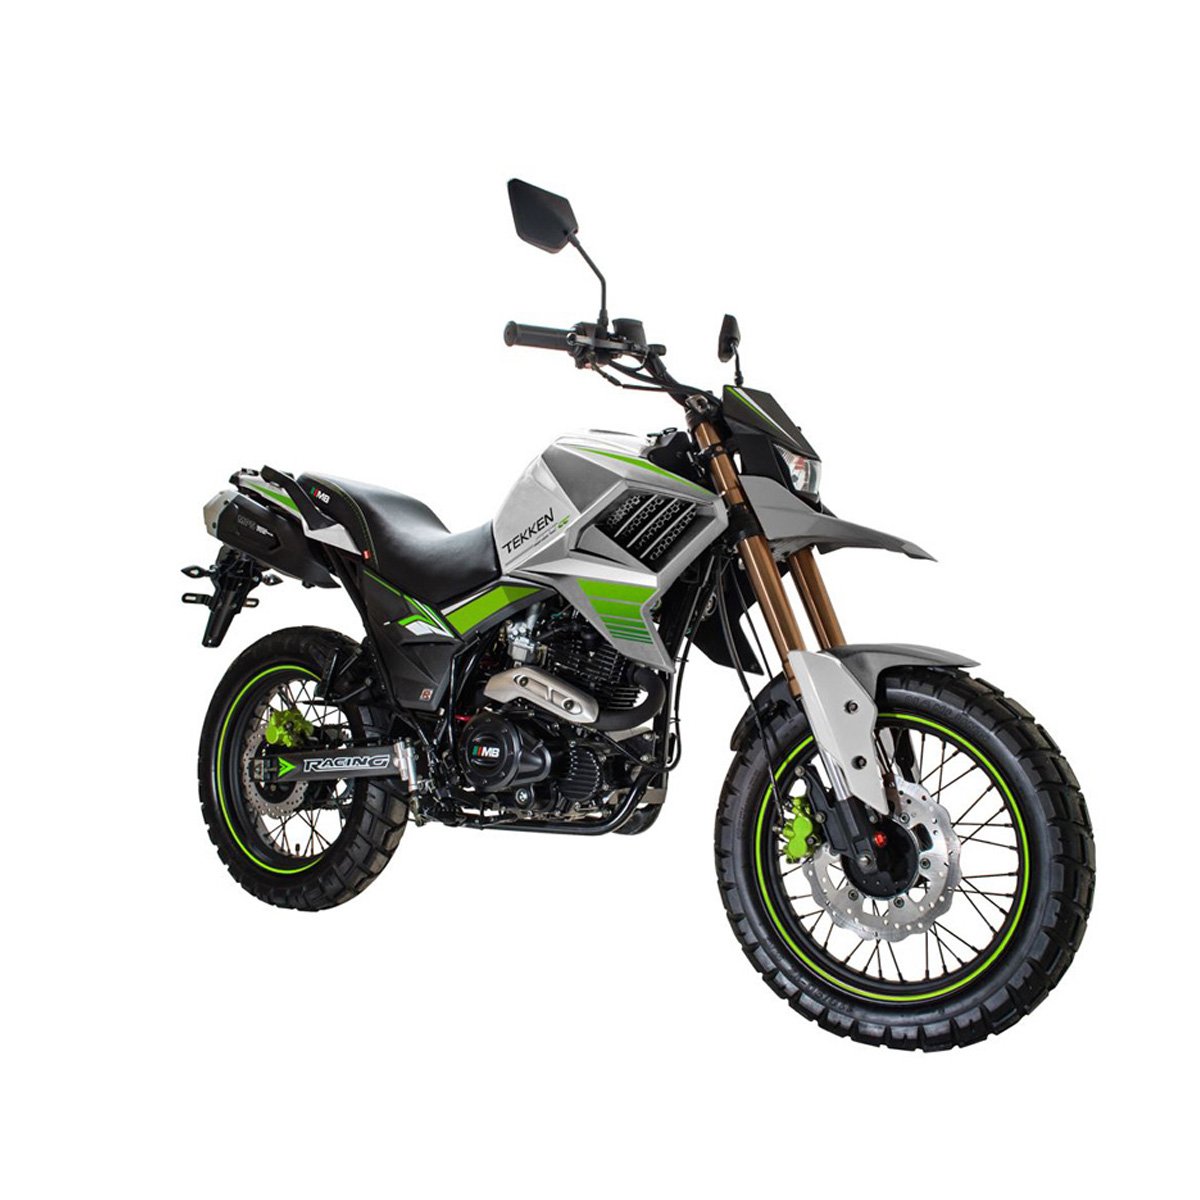 Motocicleta tekken 250cc doblepro mb